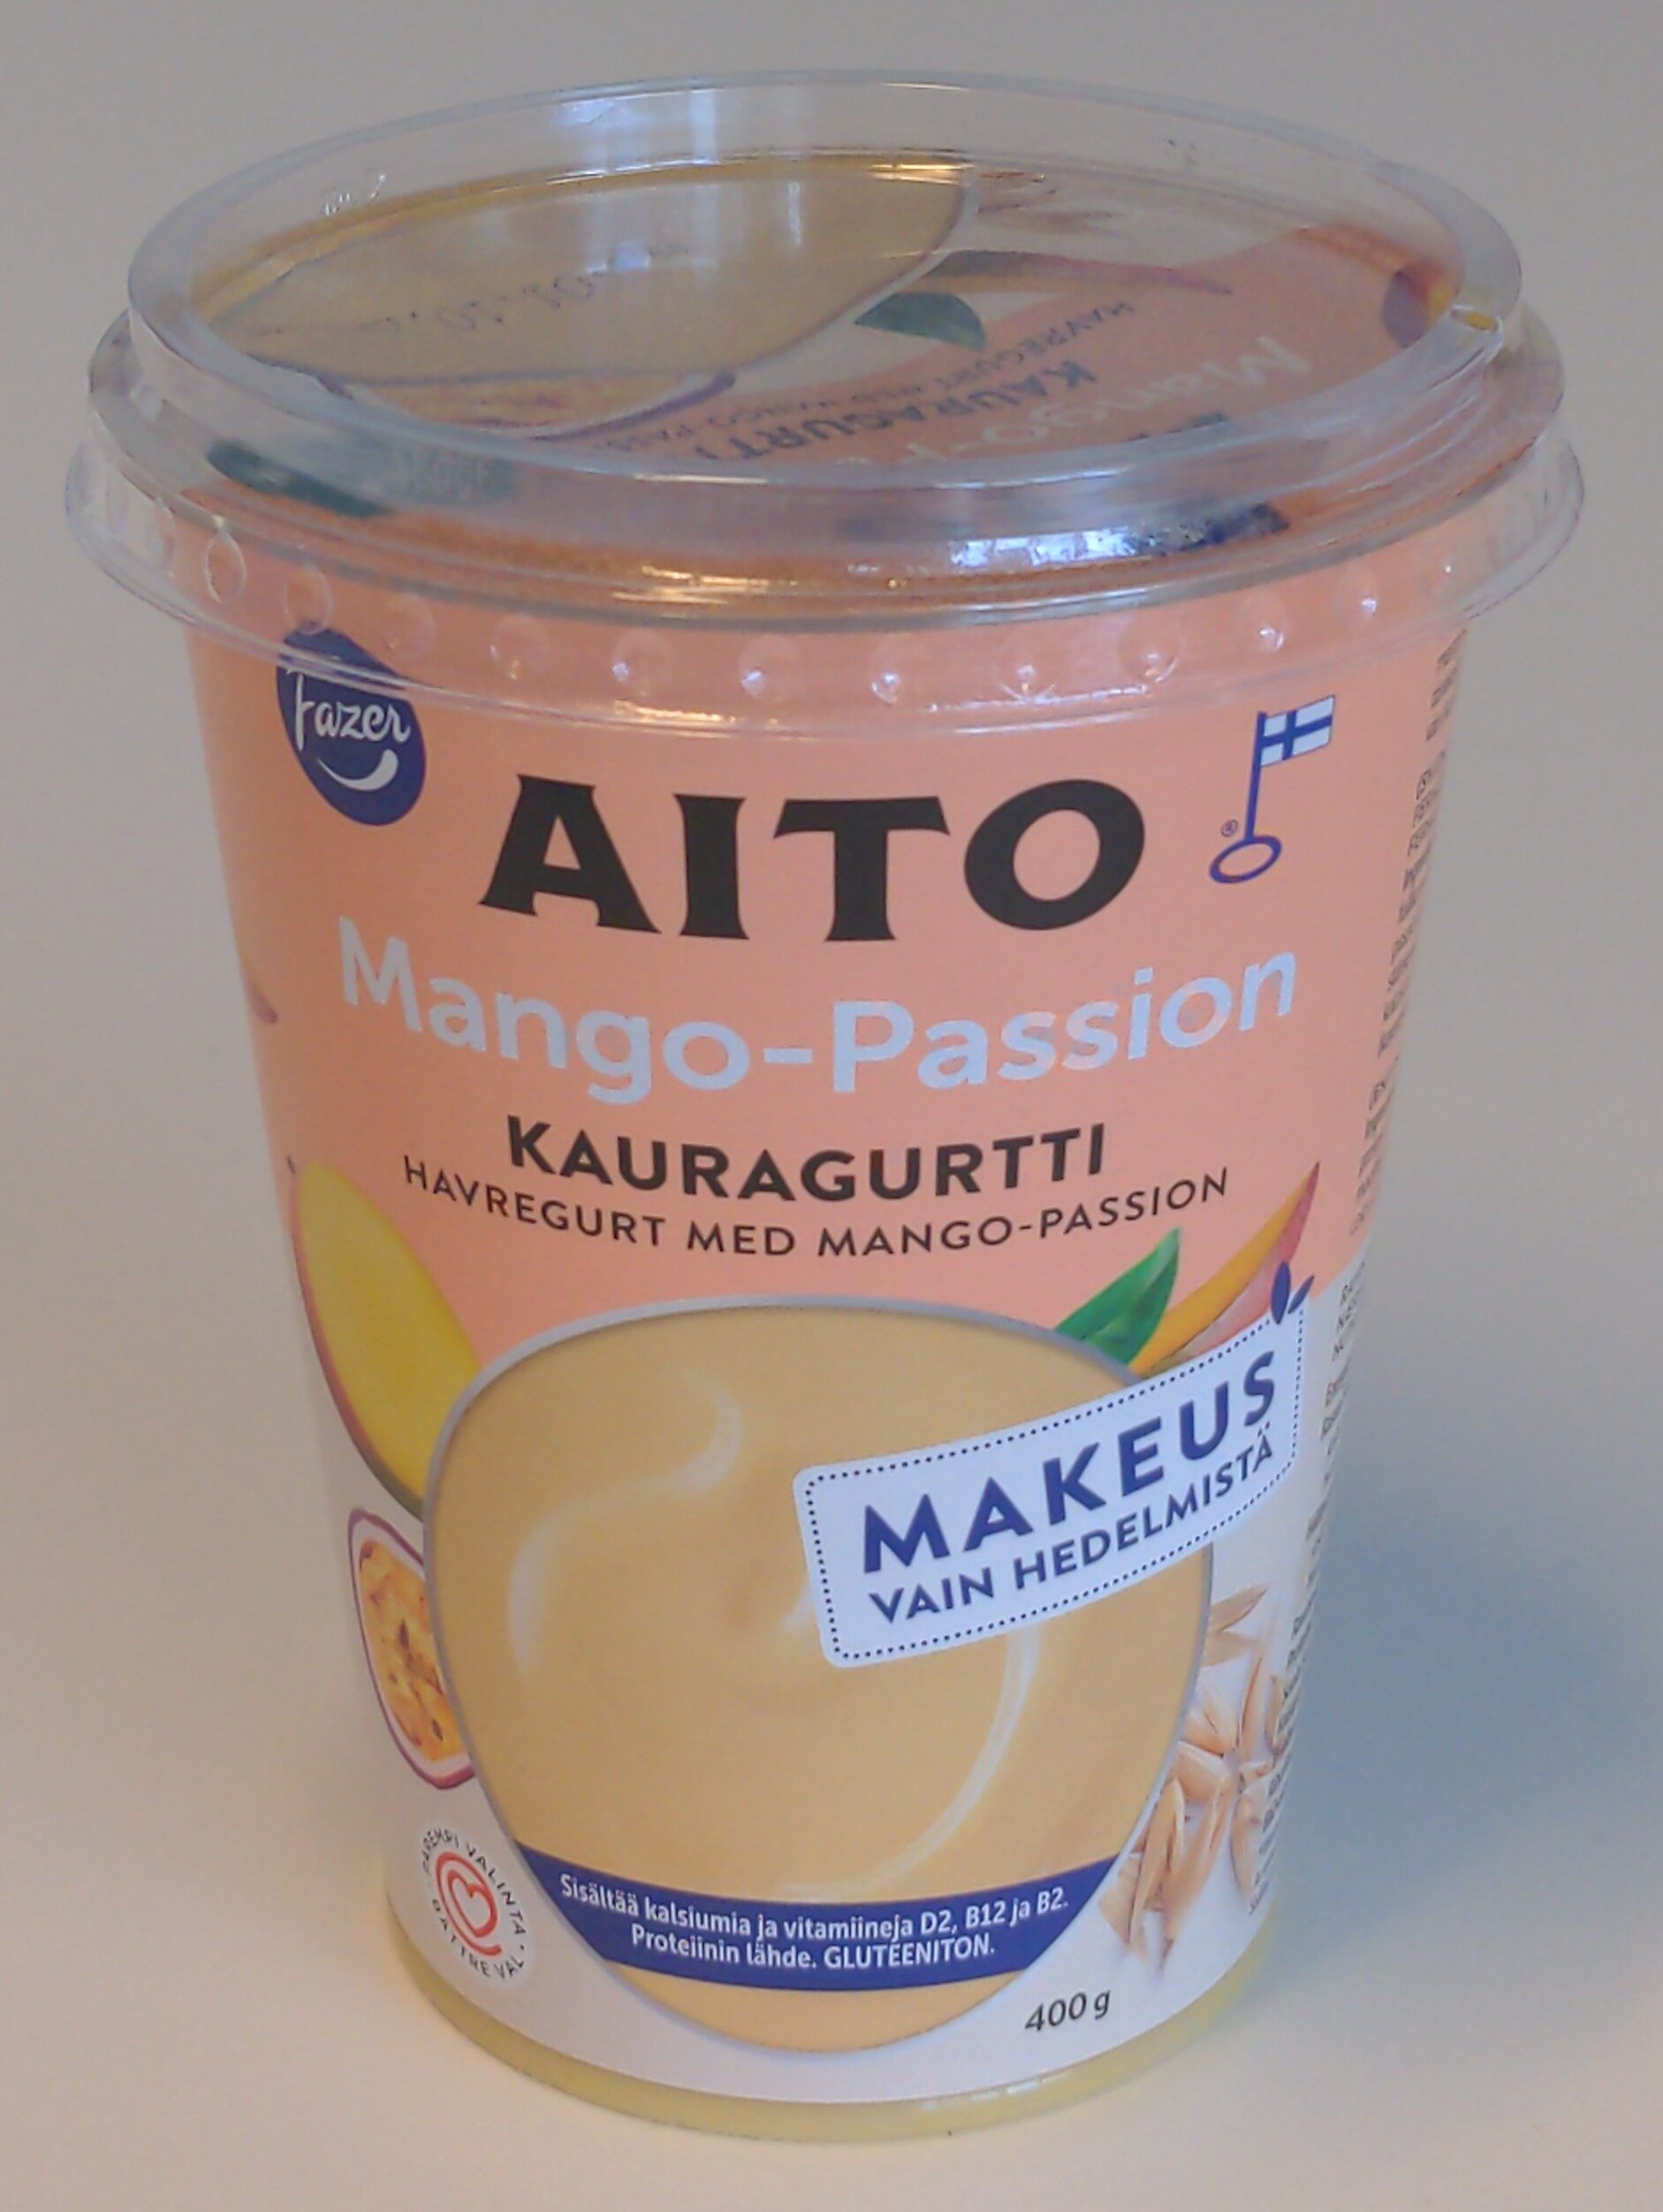 Aito kauragurtti mango-passion - Produit - fi